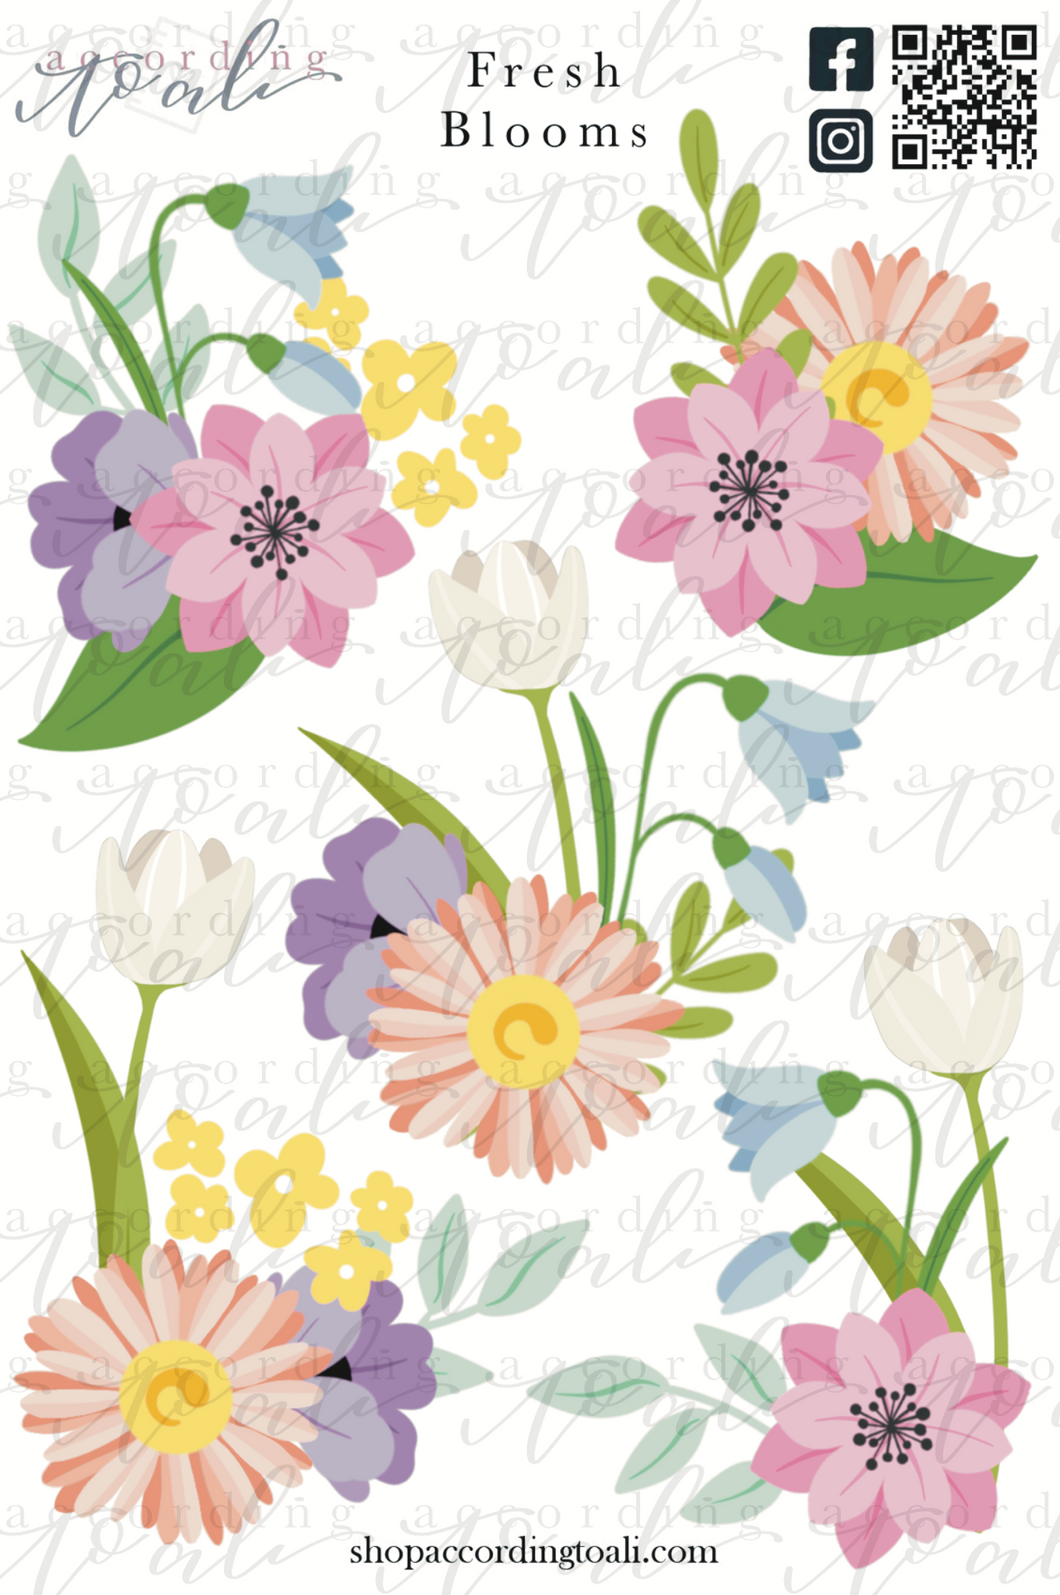 Fresh Blooms Sticker Sheet